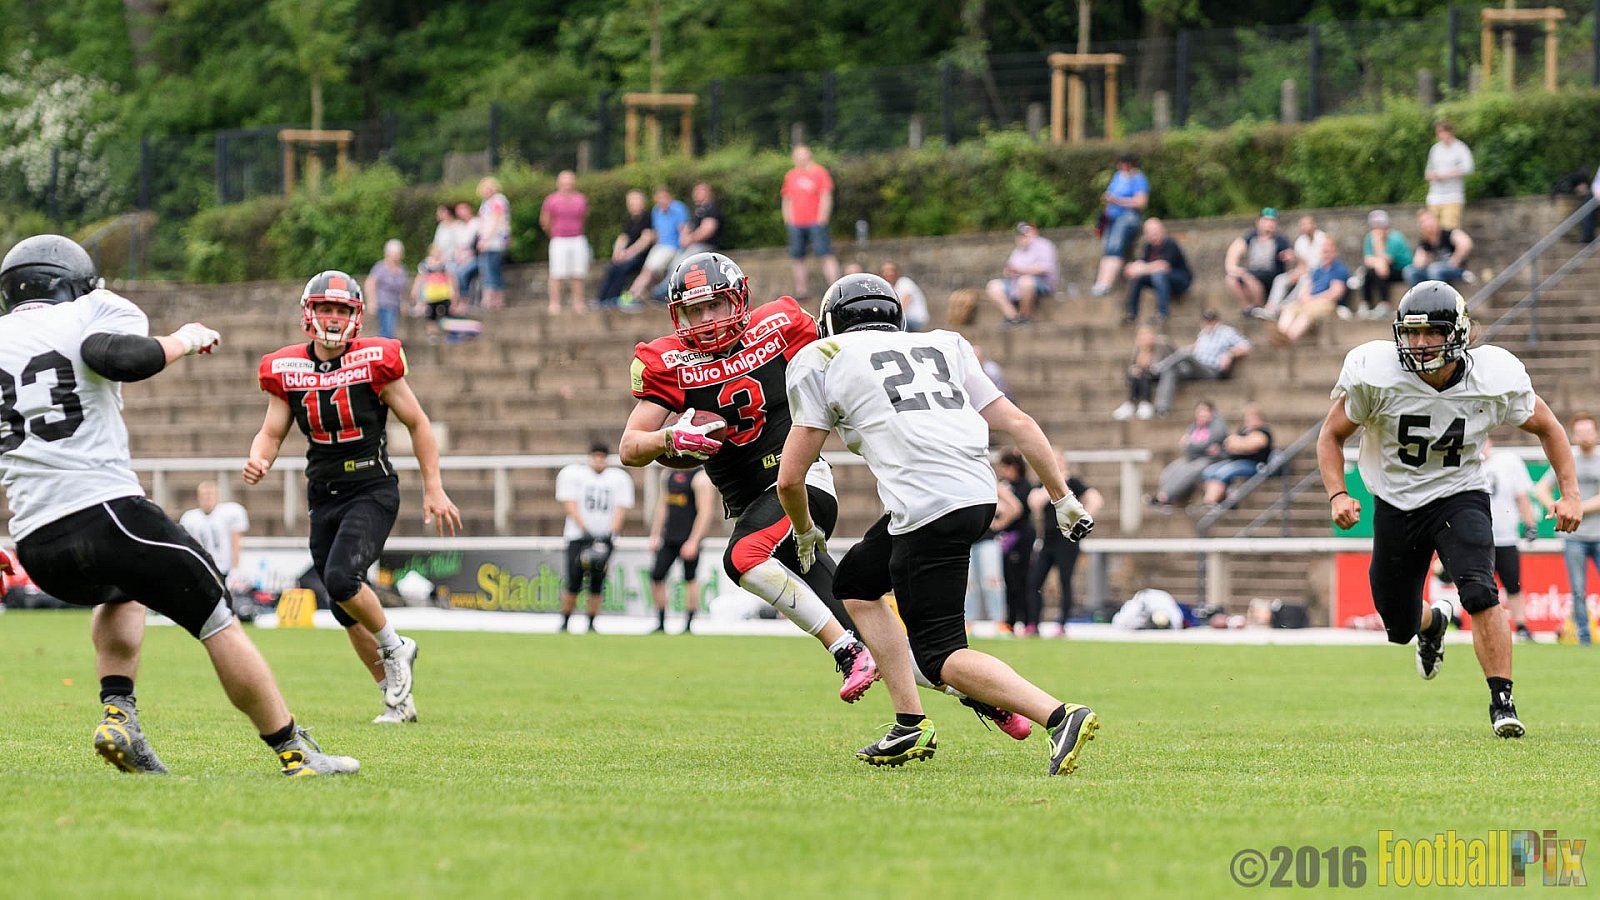 Solingen Paladins vs. Cologne Falcons - 28.05.2016 RL NRW: Solingen Paladins vs. Cologne Falcons (21:7)